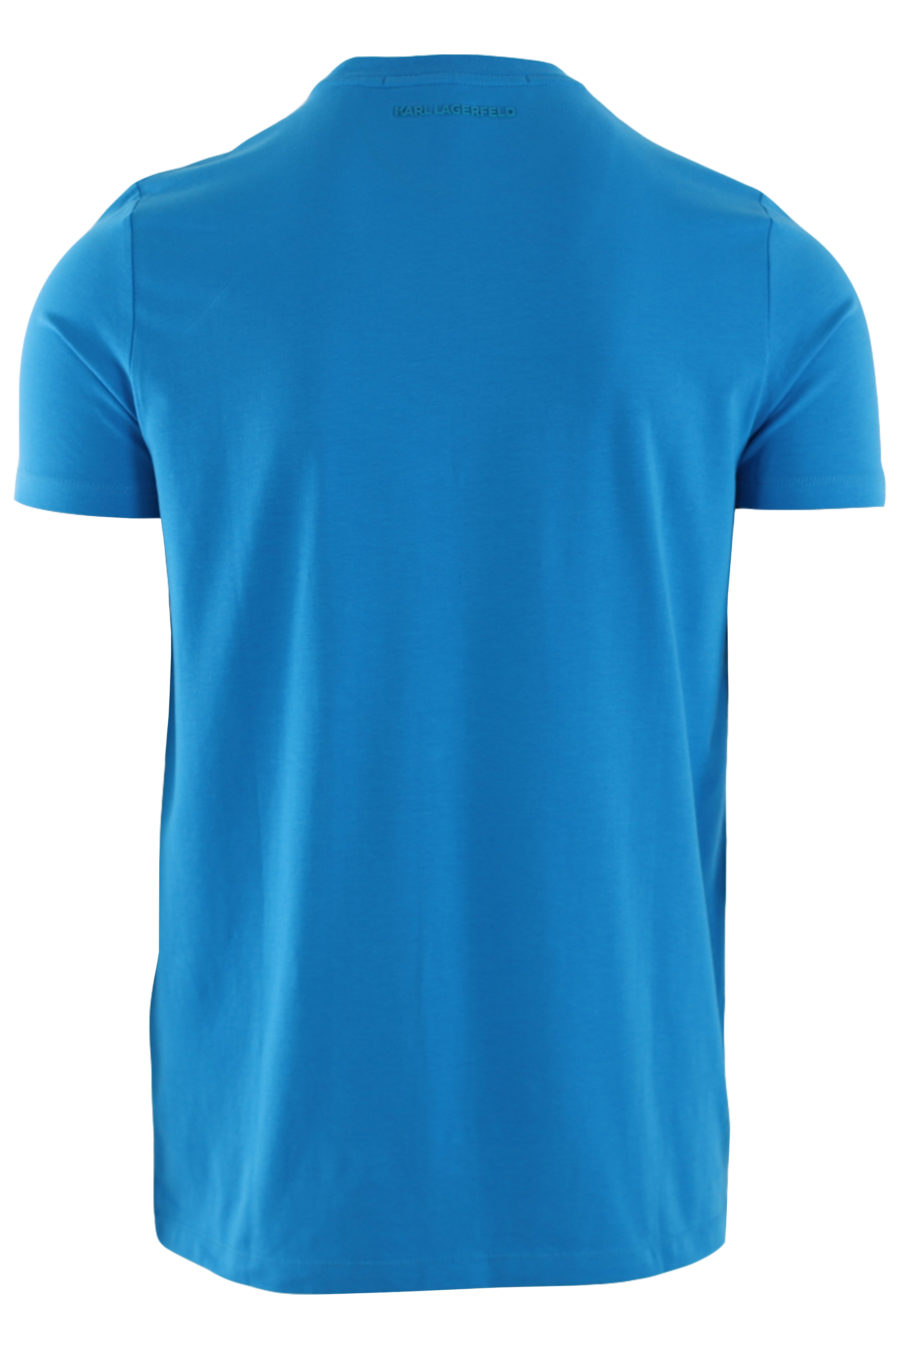 T-shirt azul com pequeno logótipo de borracha - IMG 8744